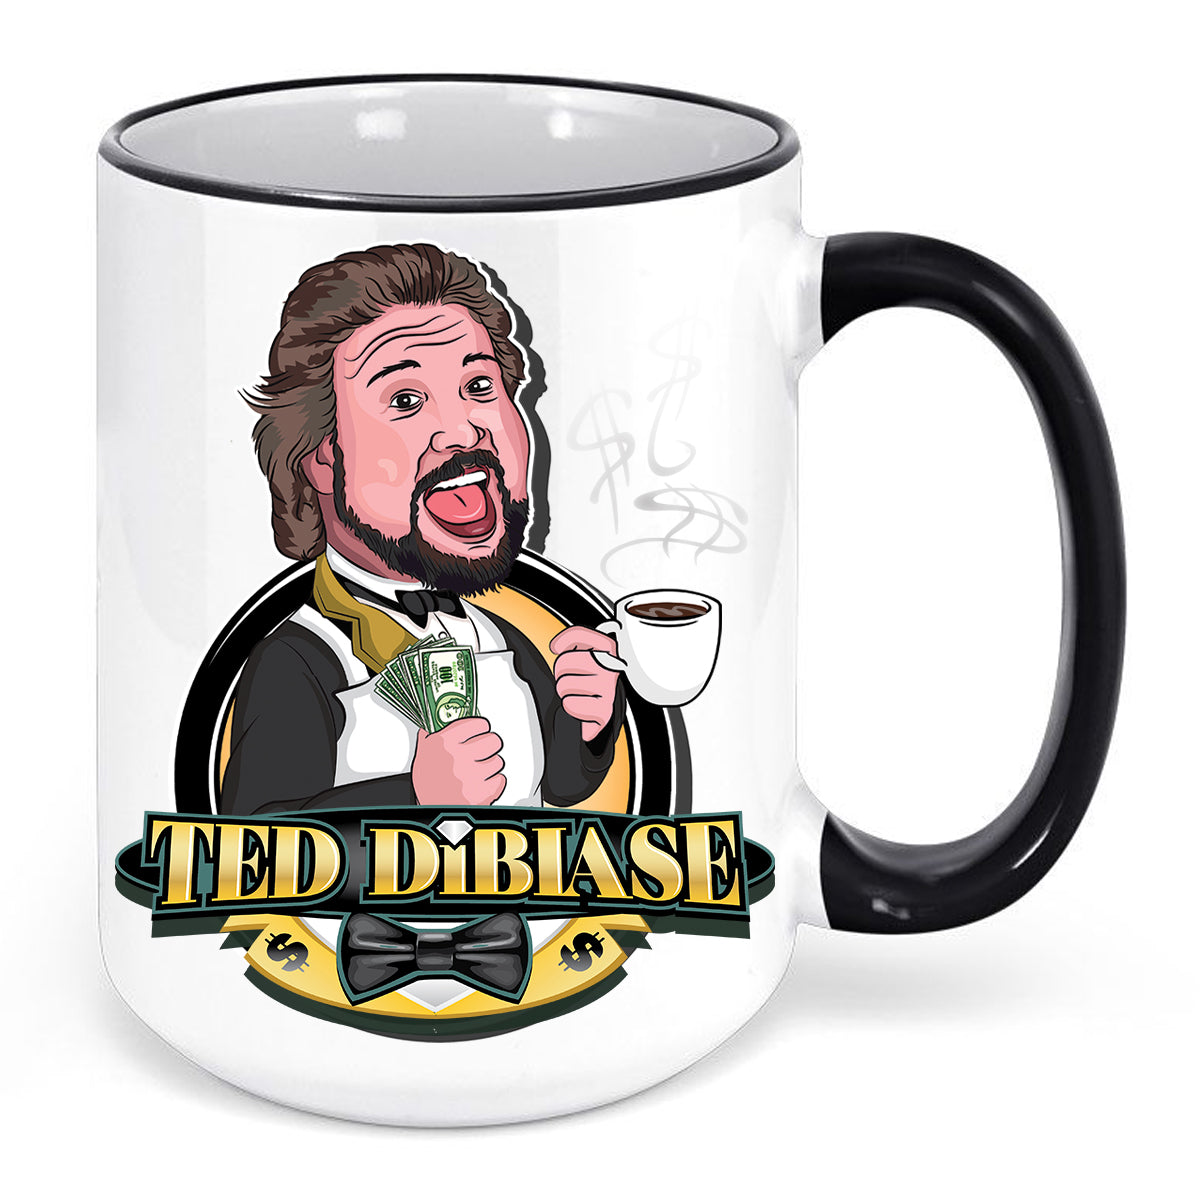 Ted DiBiase - Everybody's Got A Price Coffee Mug